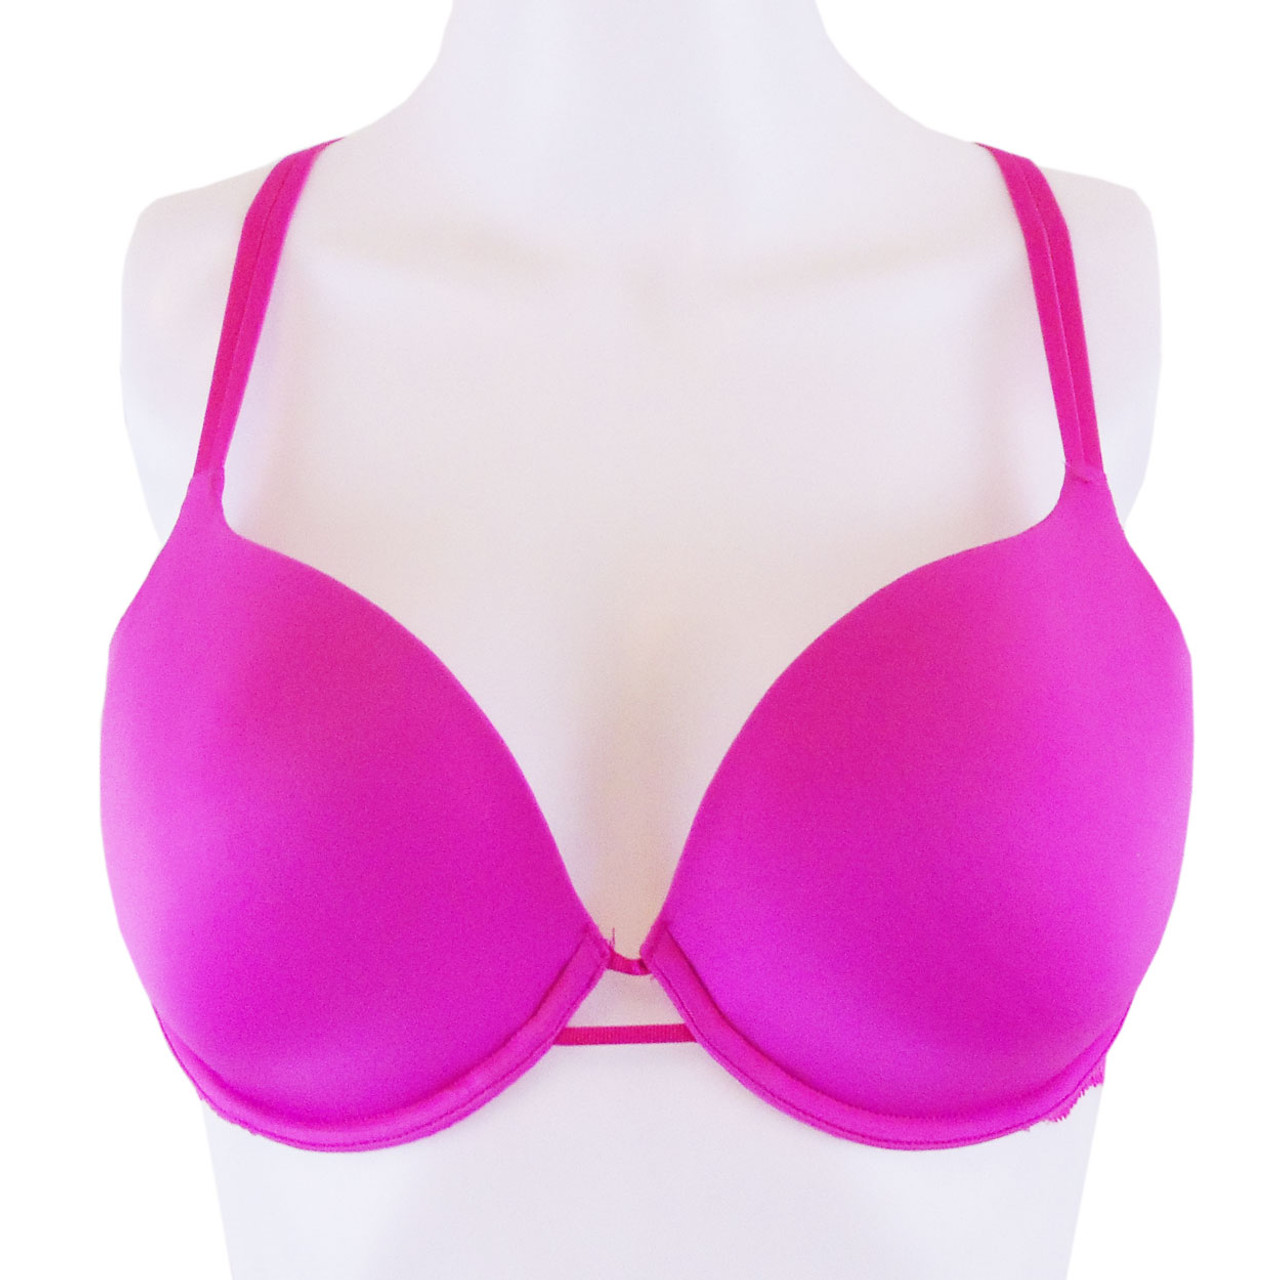 Cotton non-underwired bra, sizes 26a-32a, pink, Dim